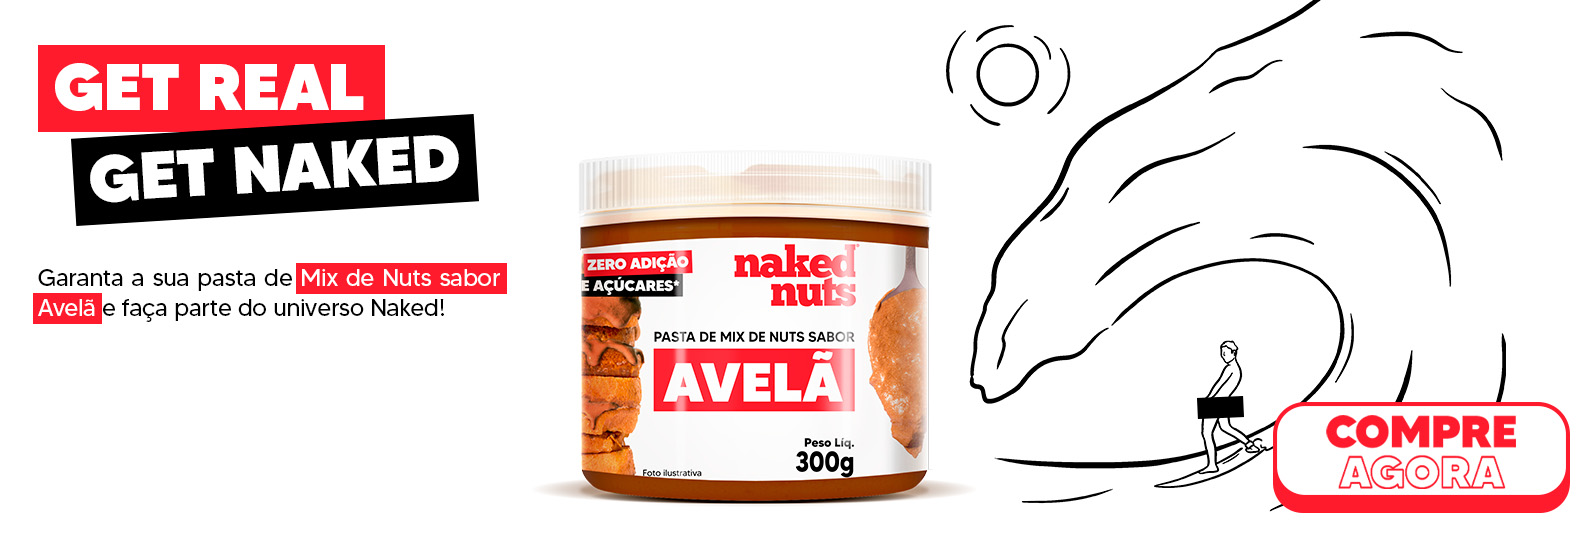 Pasta de Mix de Nuts Sabor avelã - Naked Nuts